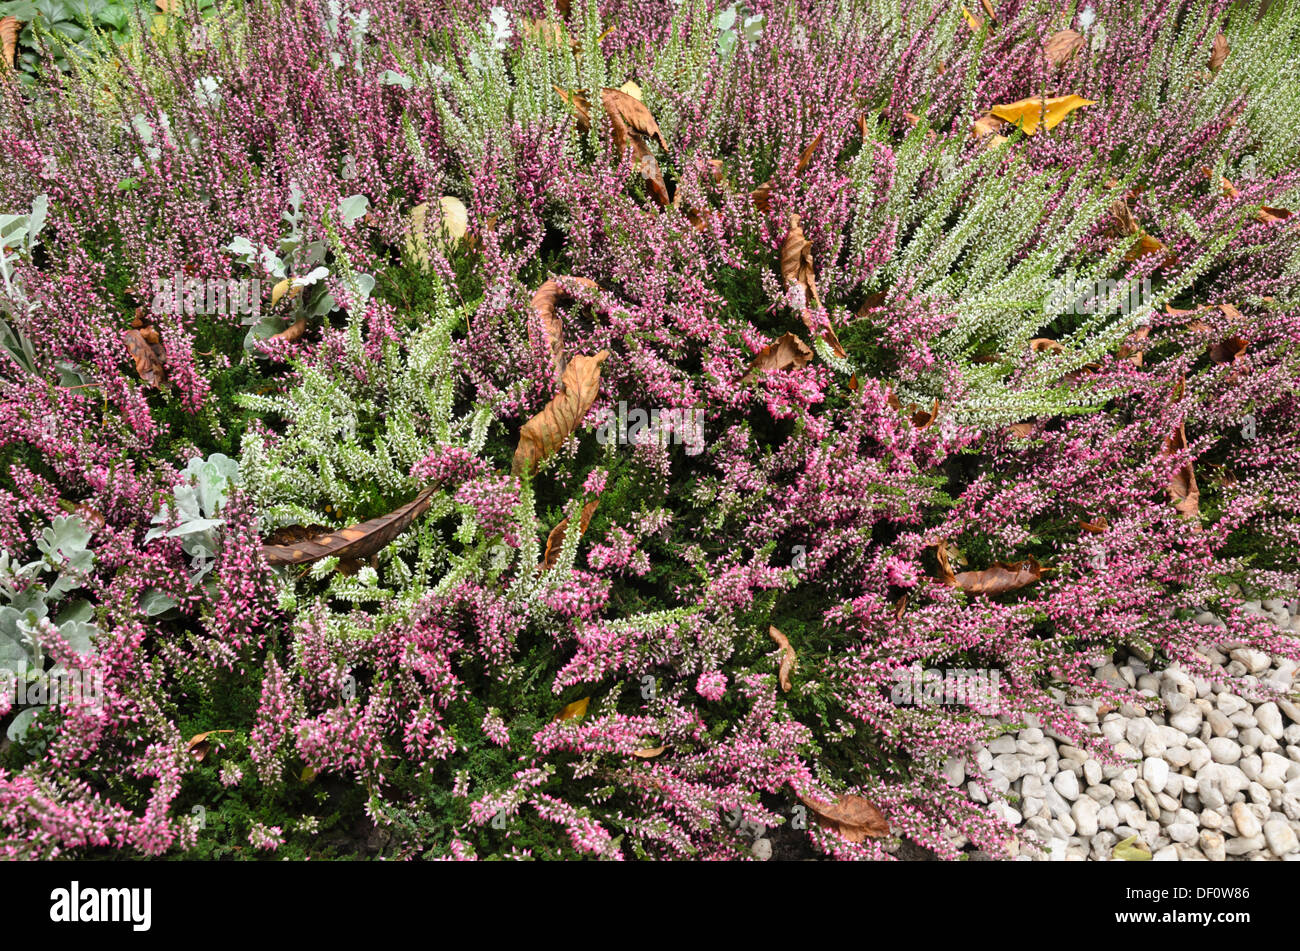 Common heather (Calluna vulgaris) Stock Photo